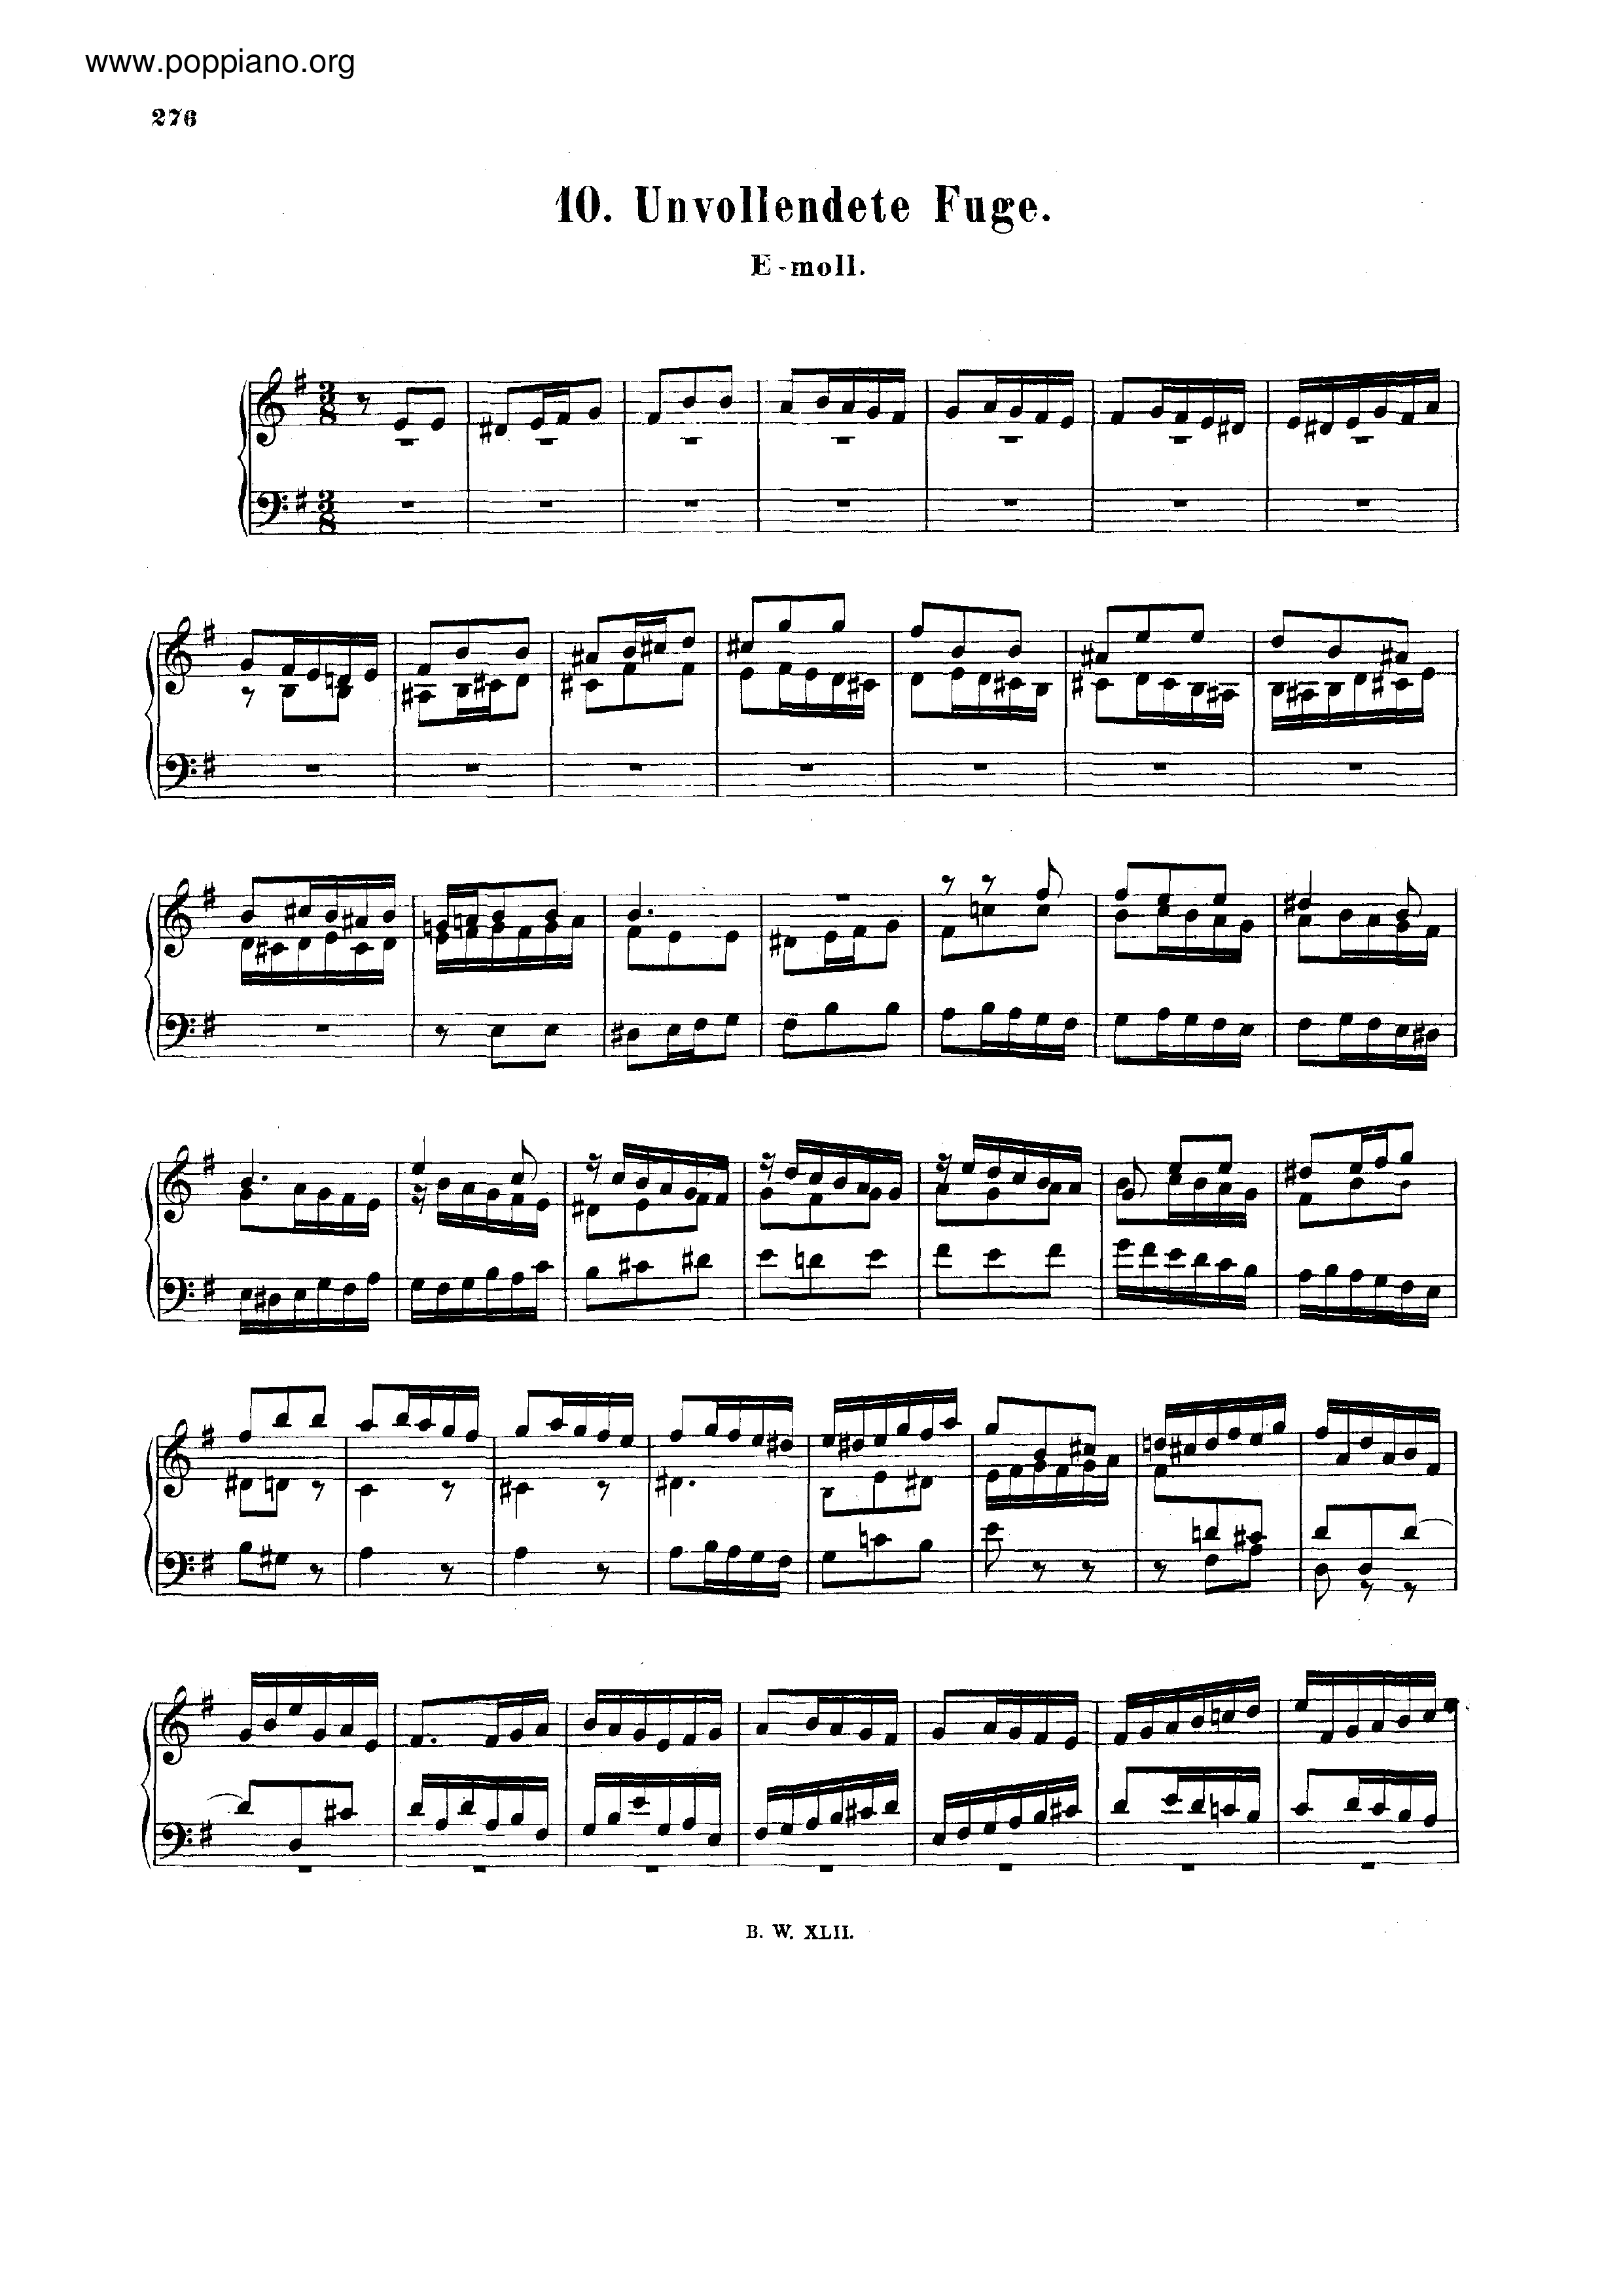 Fugue in e minor, BWV 960 (unfinished)ピアノ譜